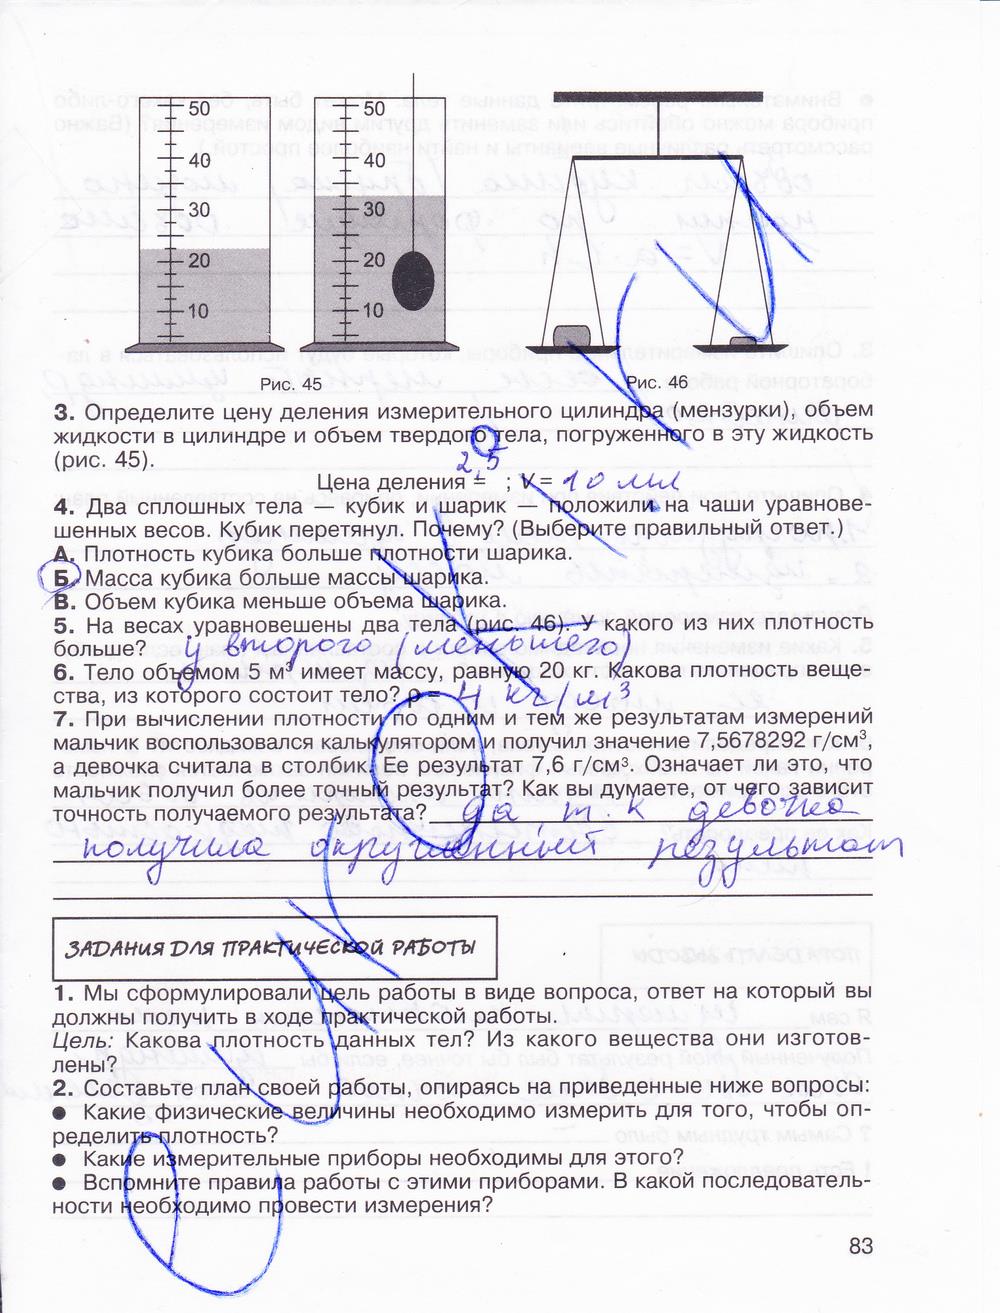 гдз 7 класс рабочая тетрадь страница 83 физика Мартынова, Бовин, Коротаев